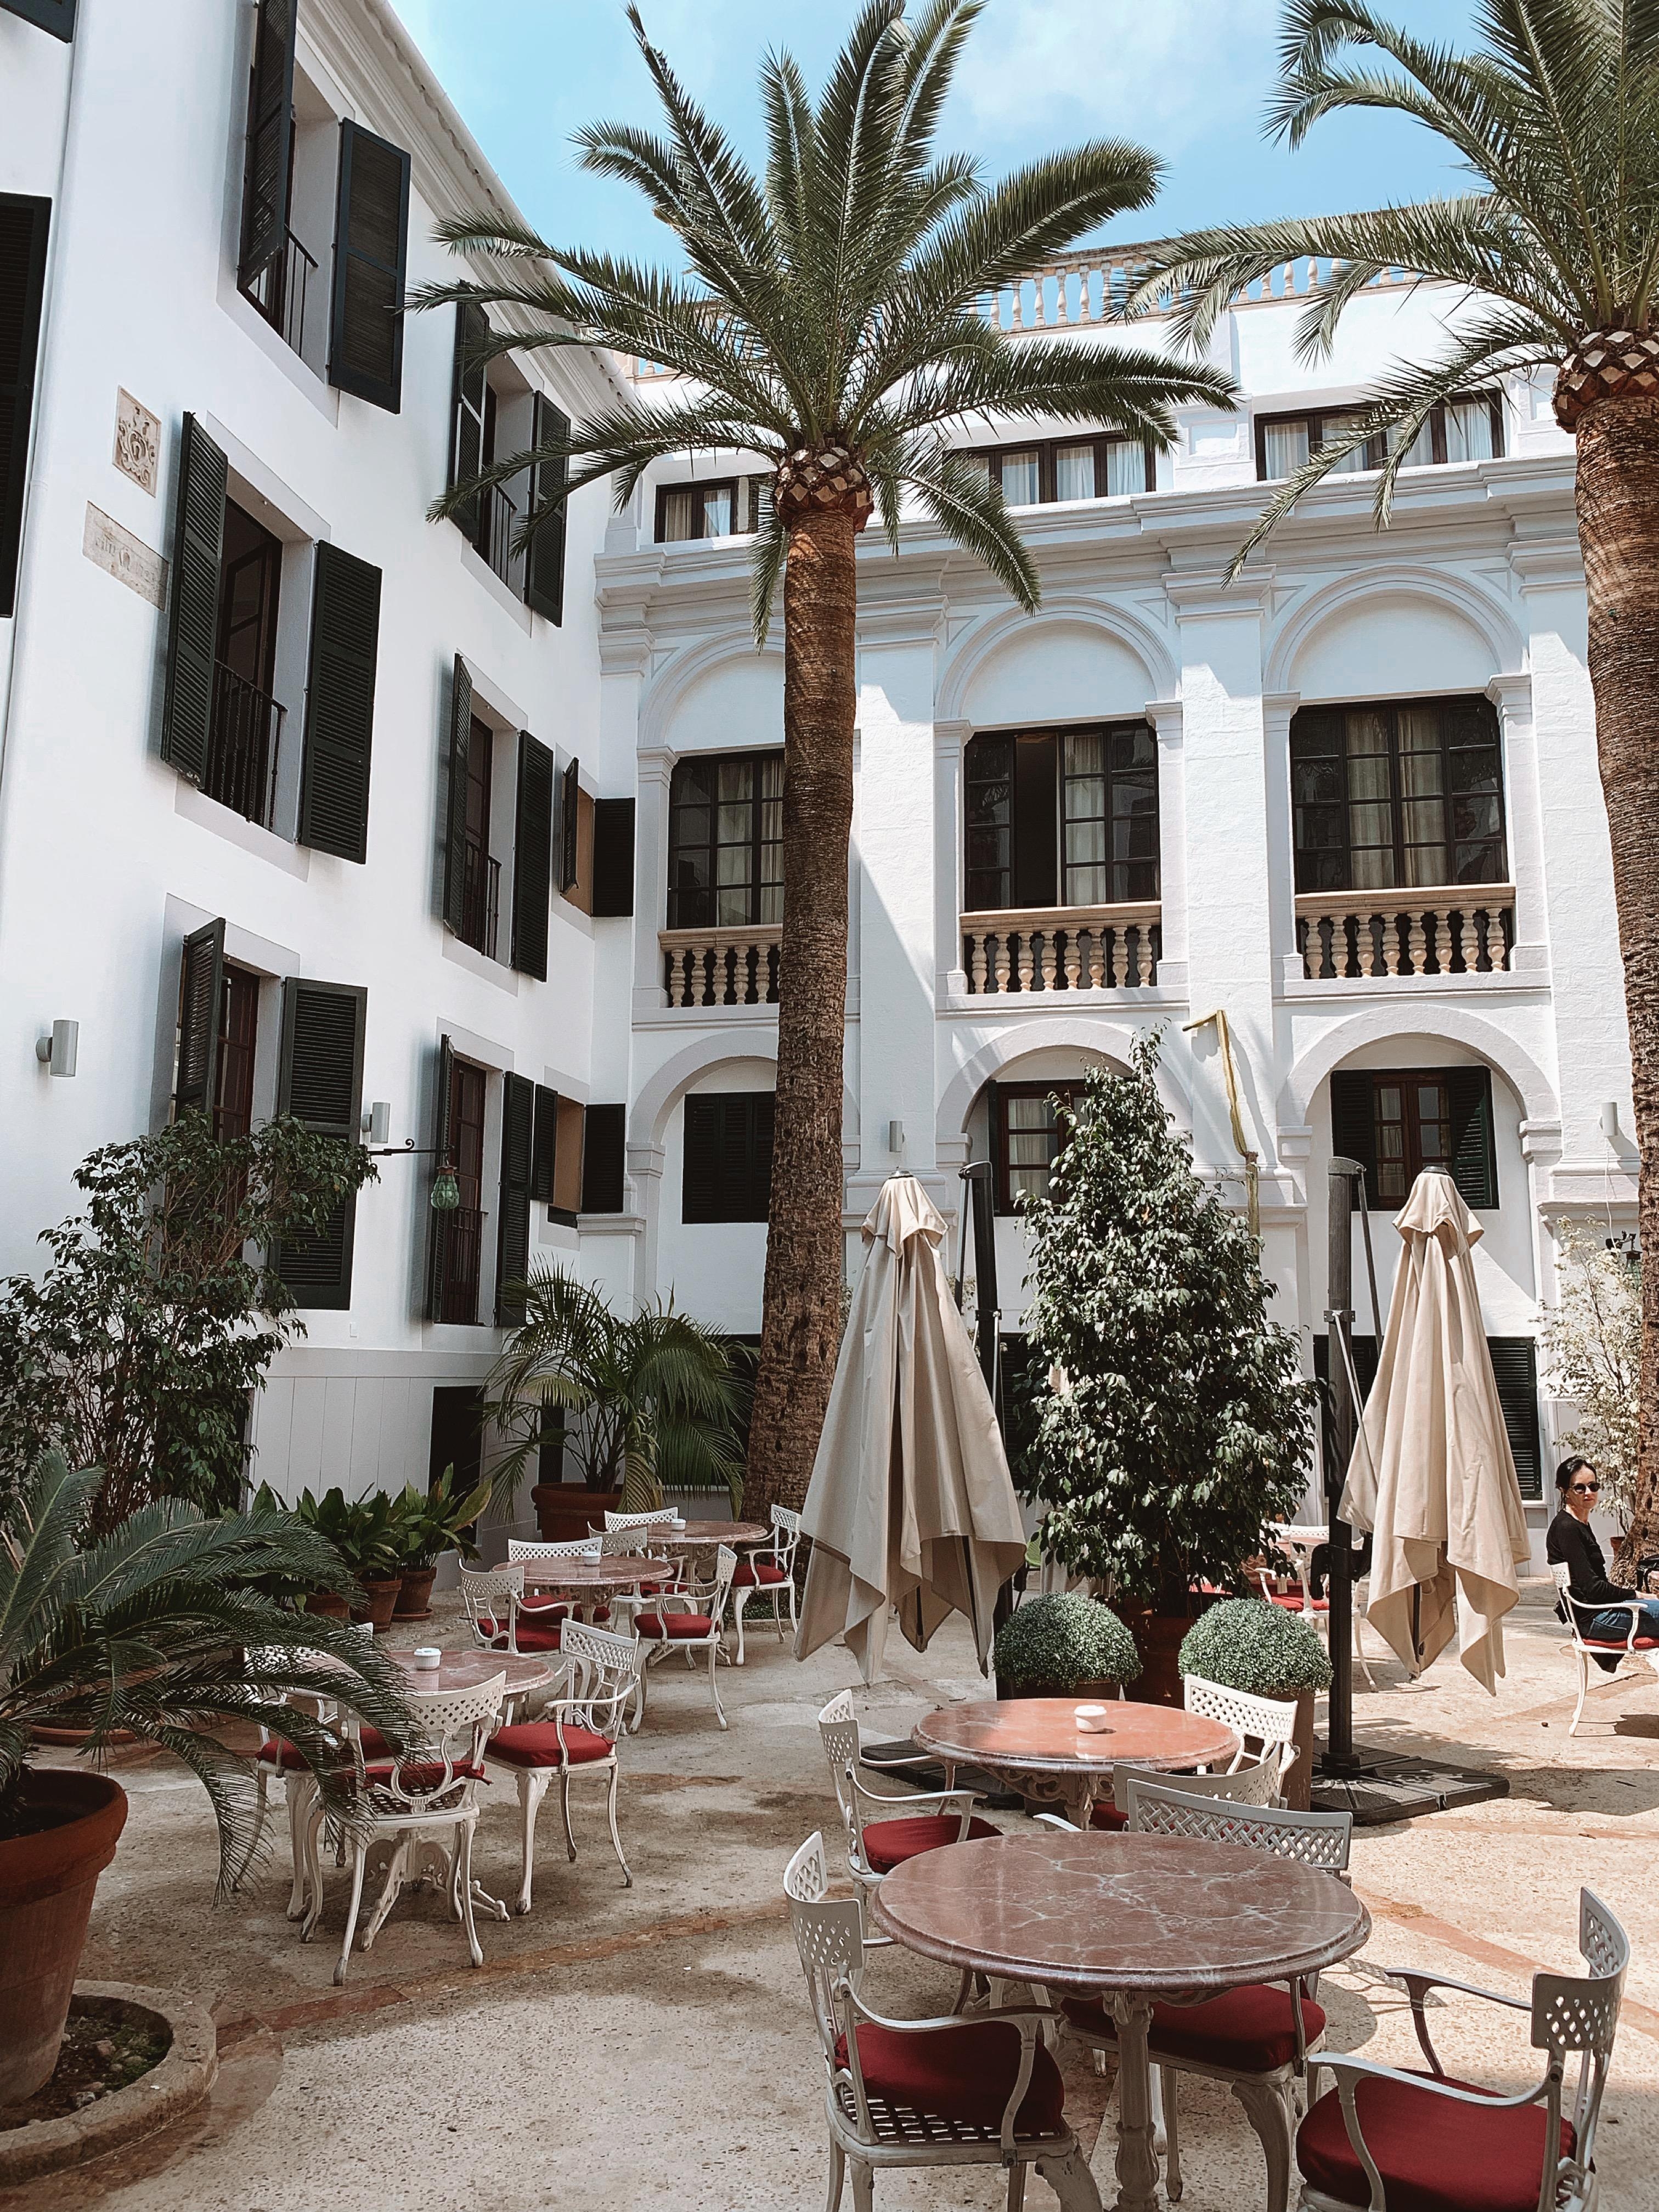 Dreamy patio 💫 #mallorca #patio #vacation #travelling #summer 